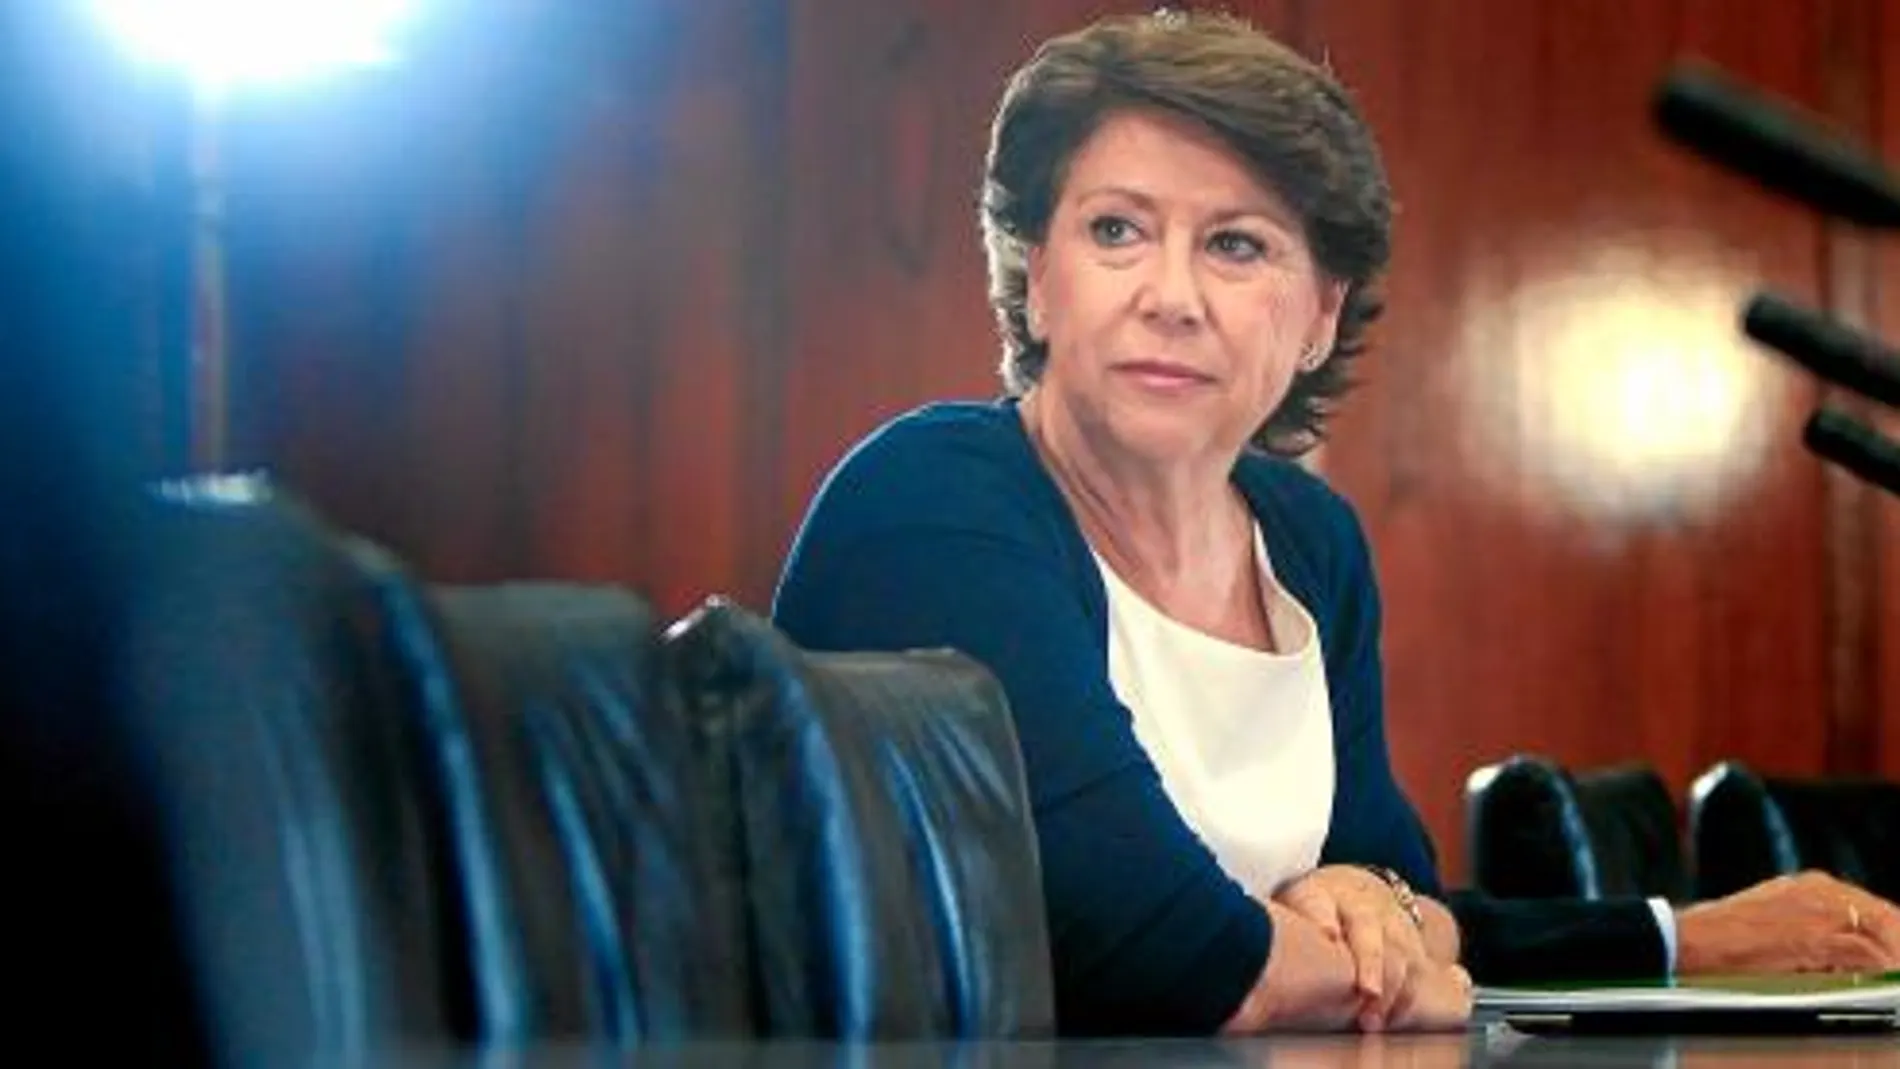 La ex consejera de Hacienda Magdalena Álvarez, ayer en el Parlamento andaluz